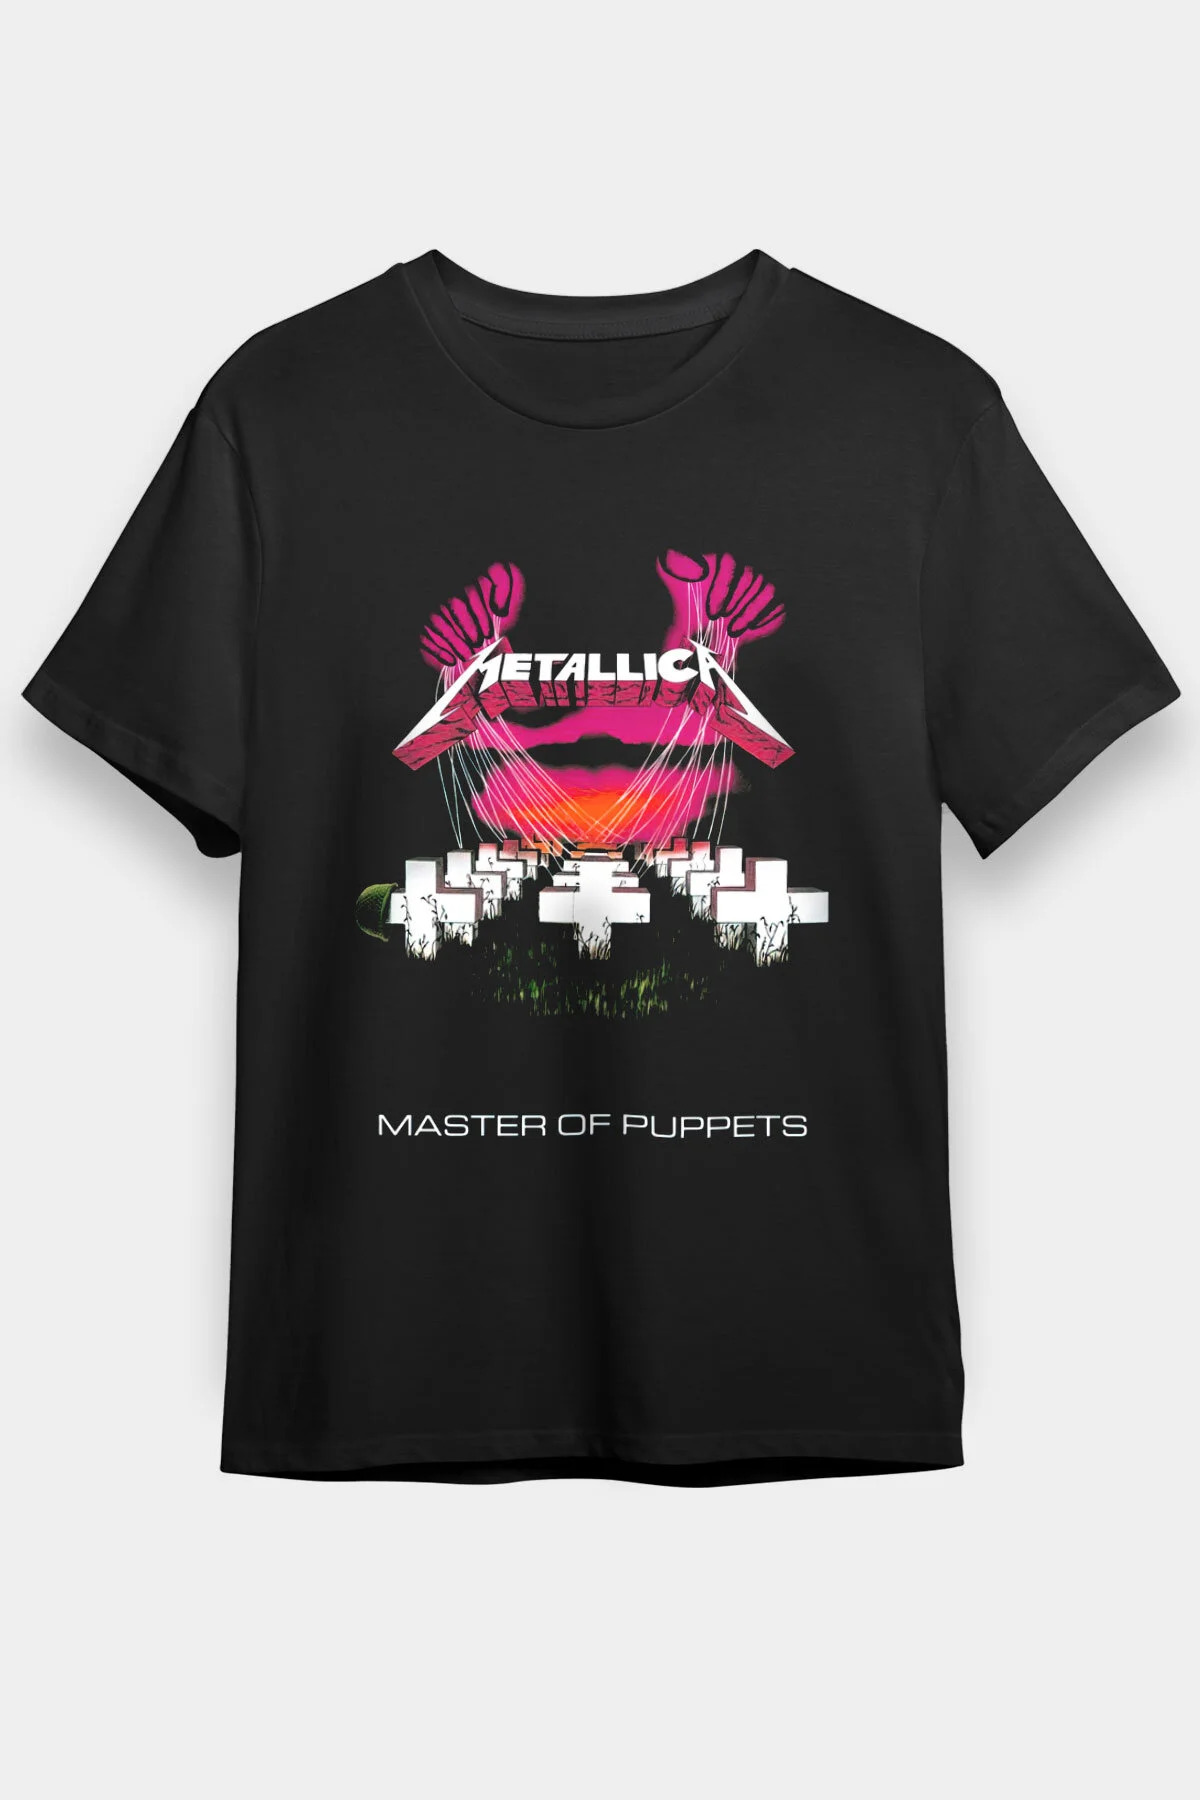 Metallica T shirt, Music Band ,master-of-puppets Tshirt 82